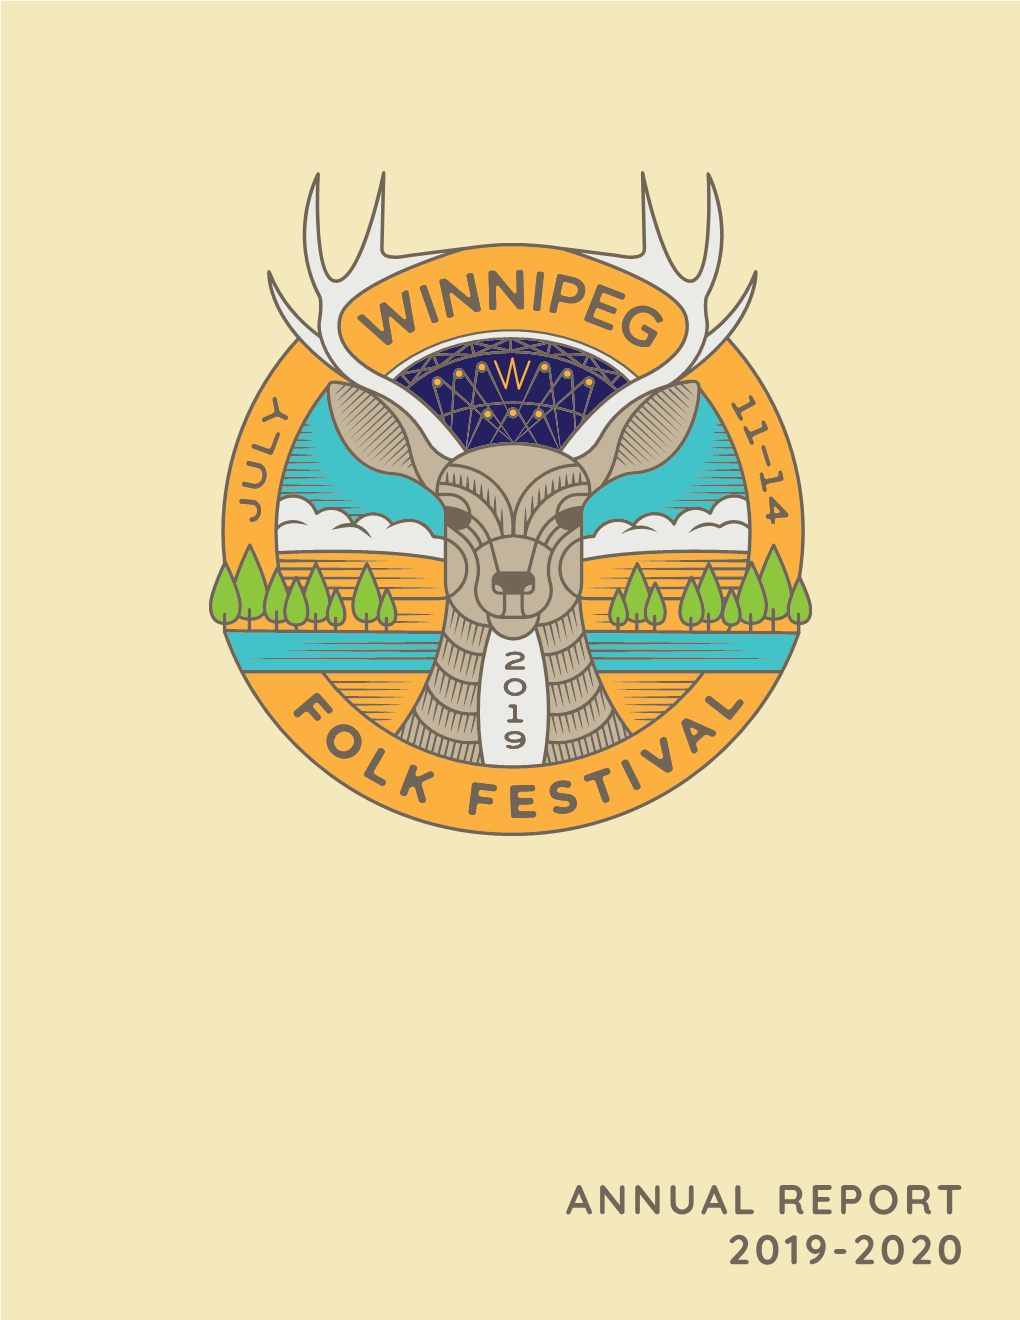 ANNUAL REPORT 2019-2020 Kacey Musgraves Winnipeg Folk Festival Annual Report 2019-2020